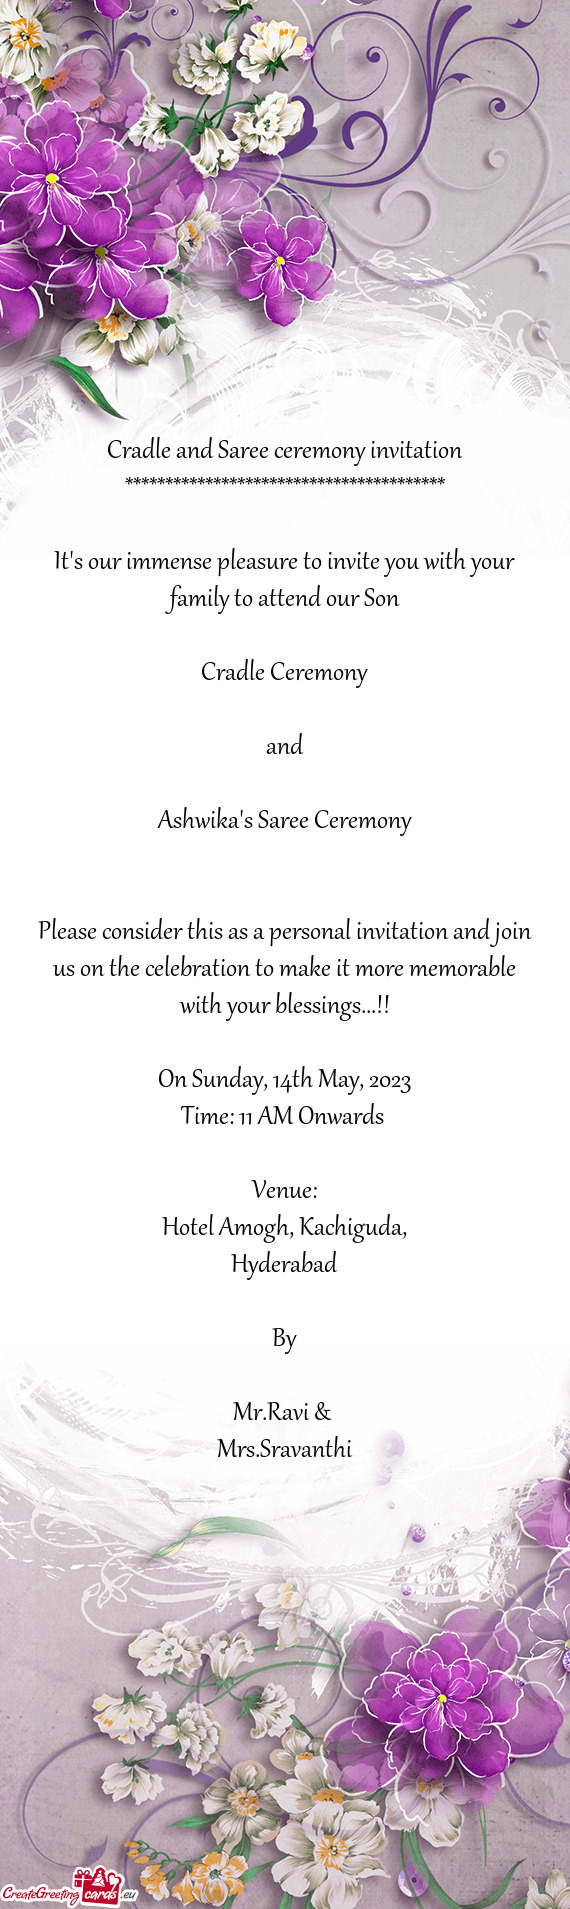 Cradle and Saree ceremony invitation